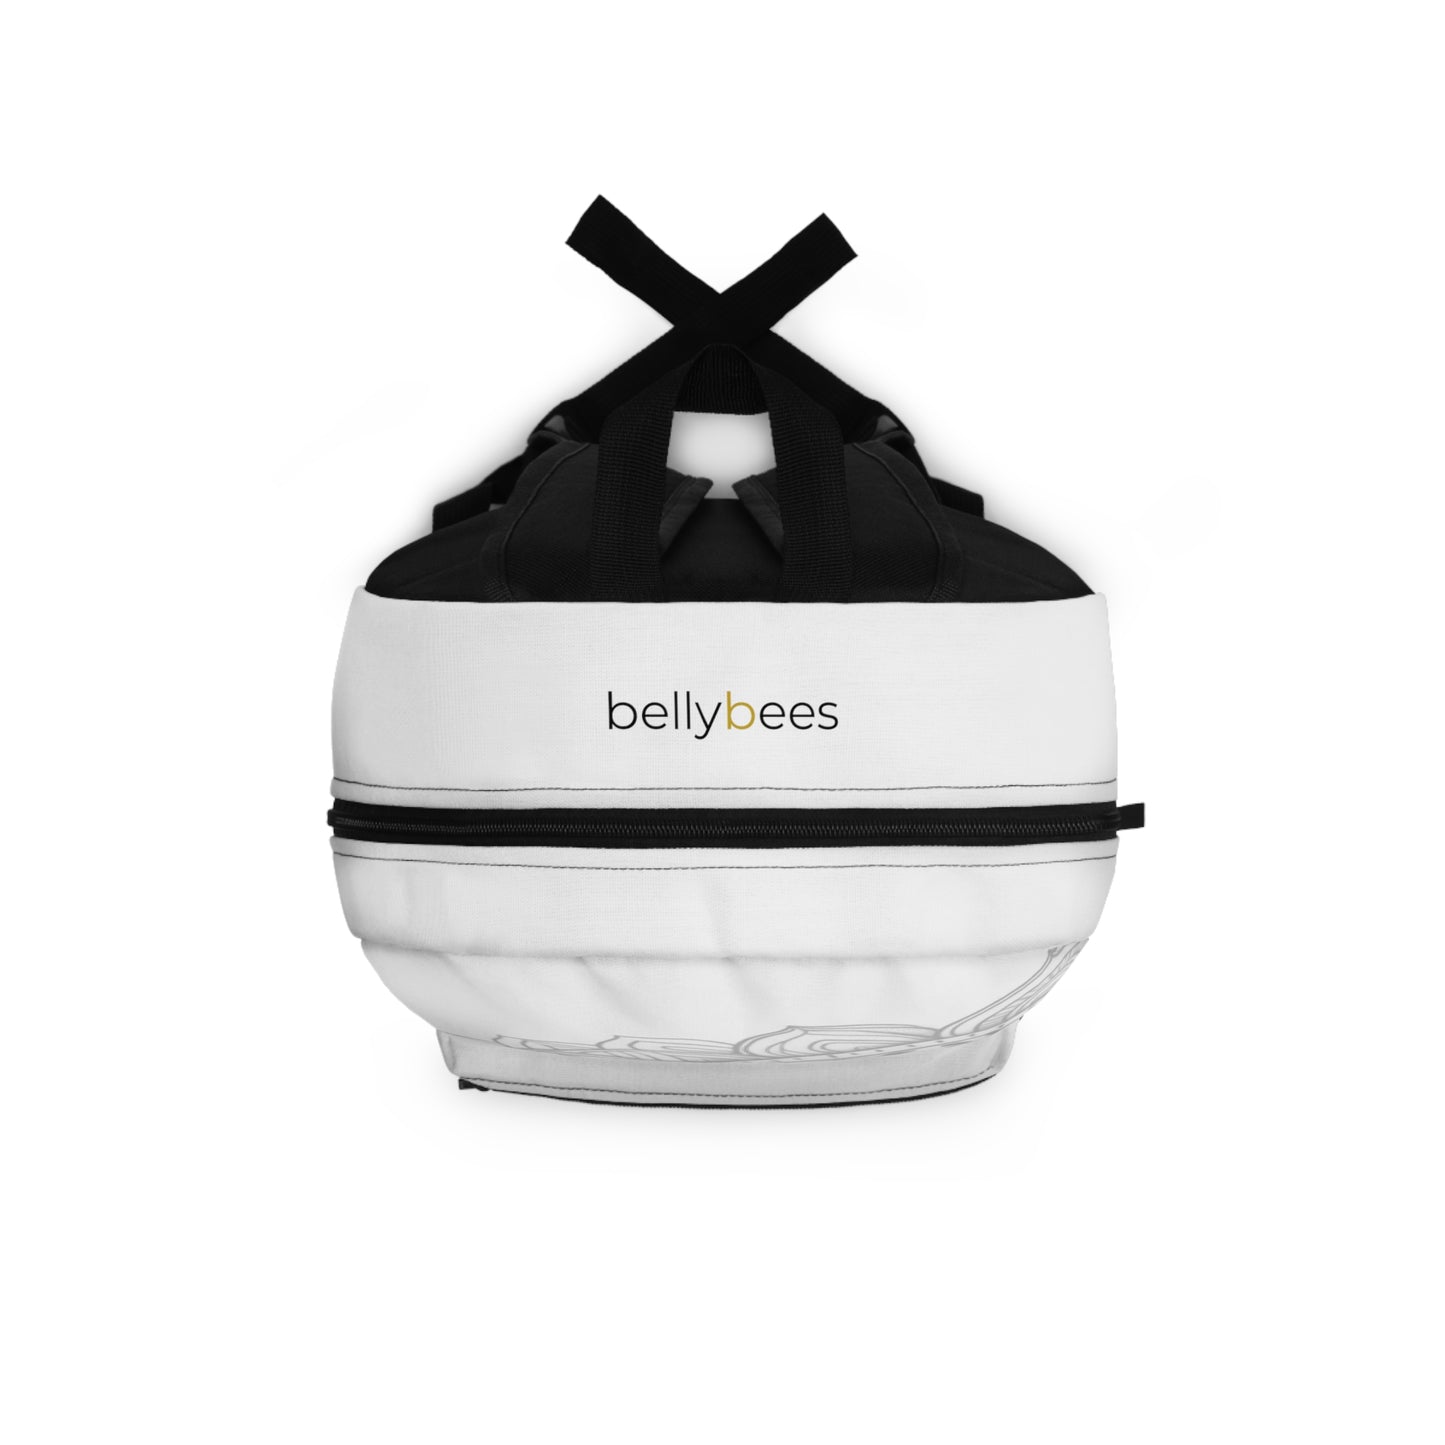 Bellybees Backpack